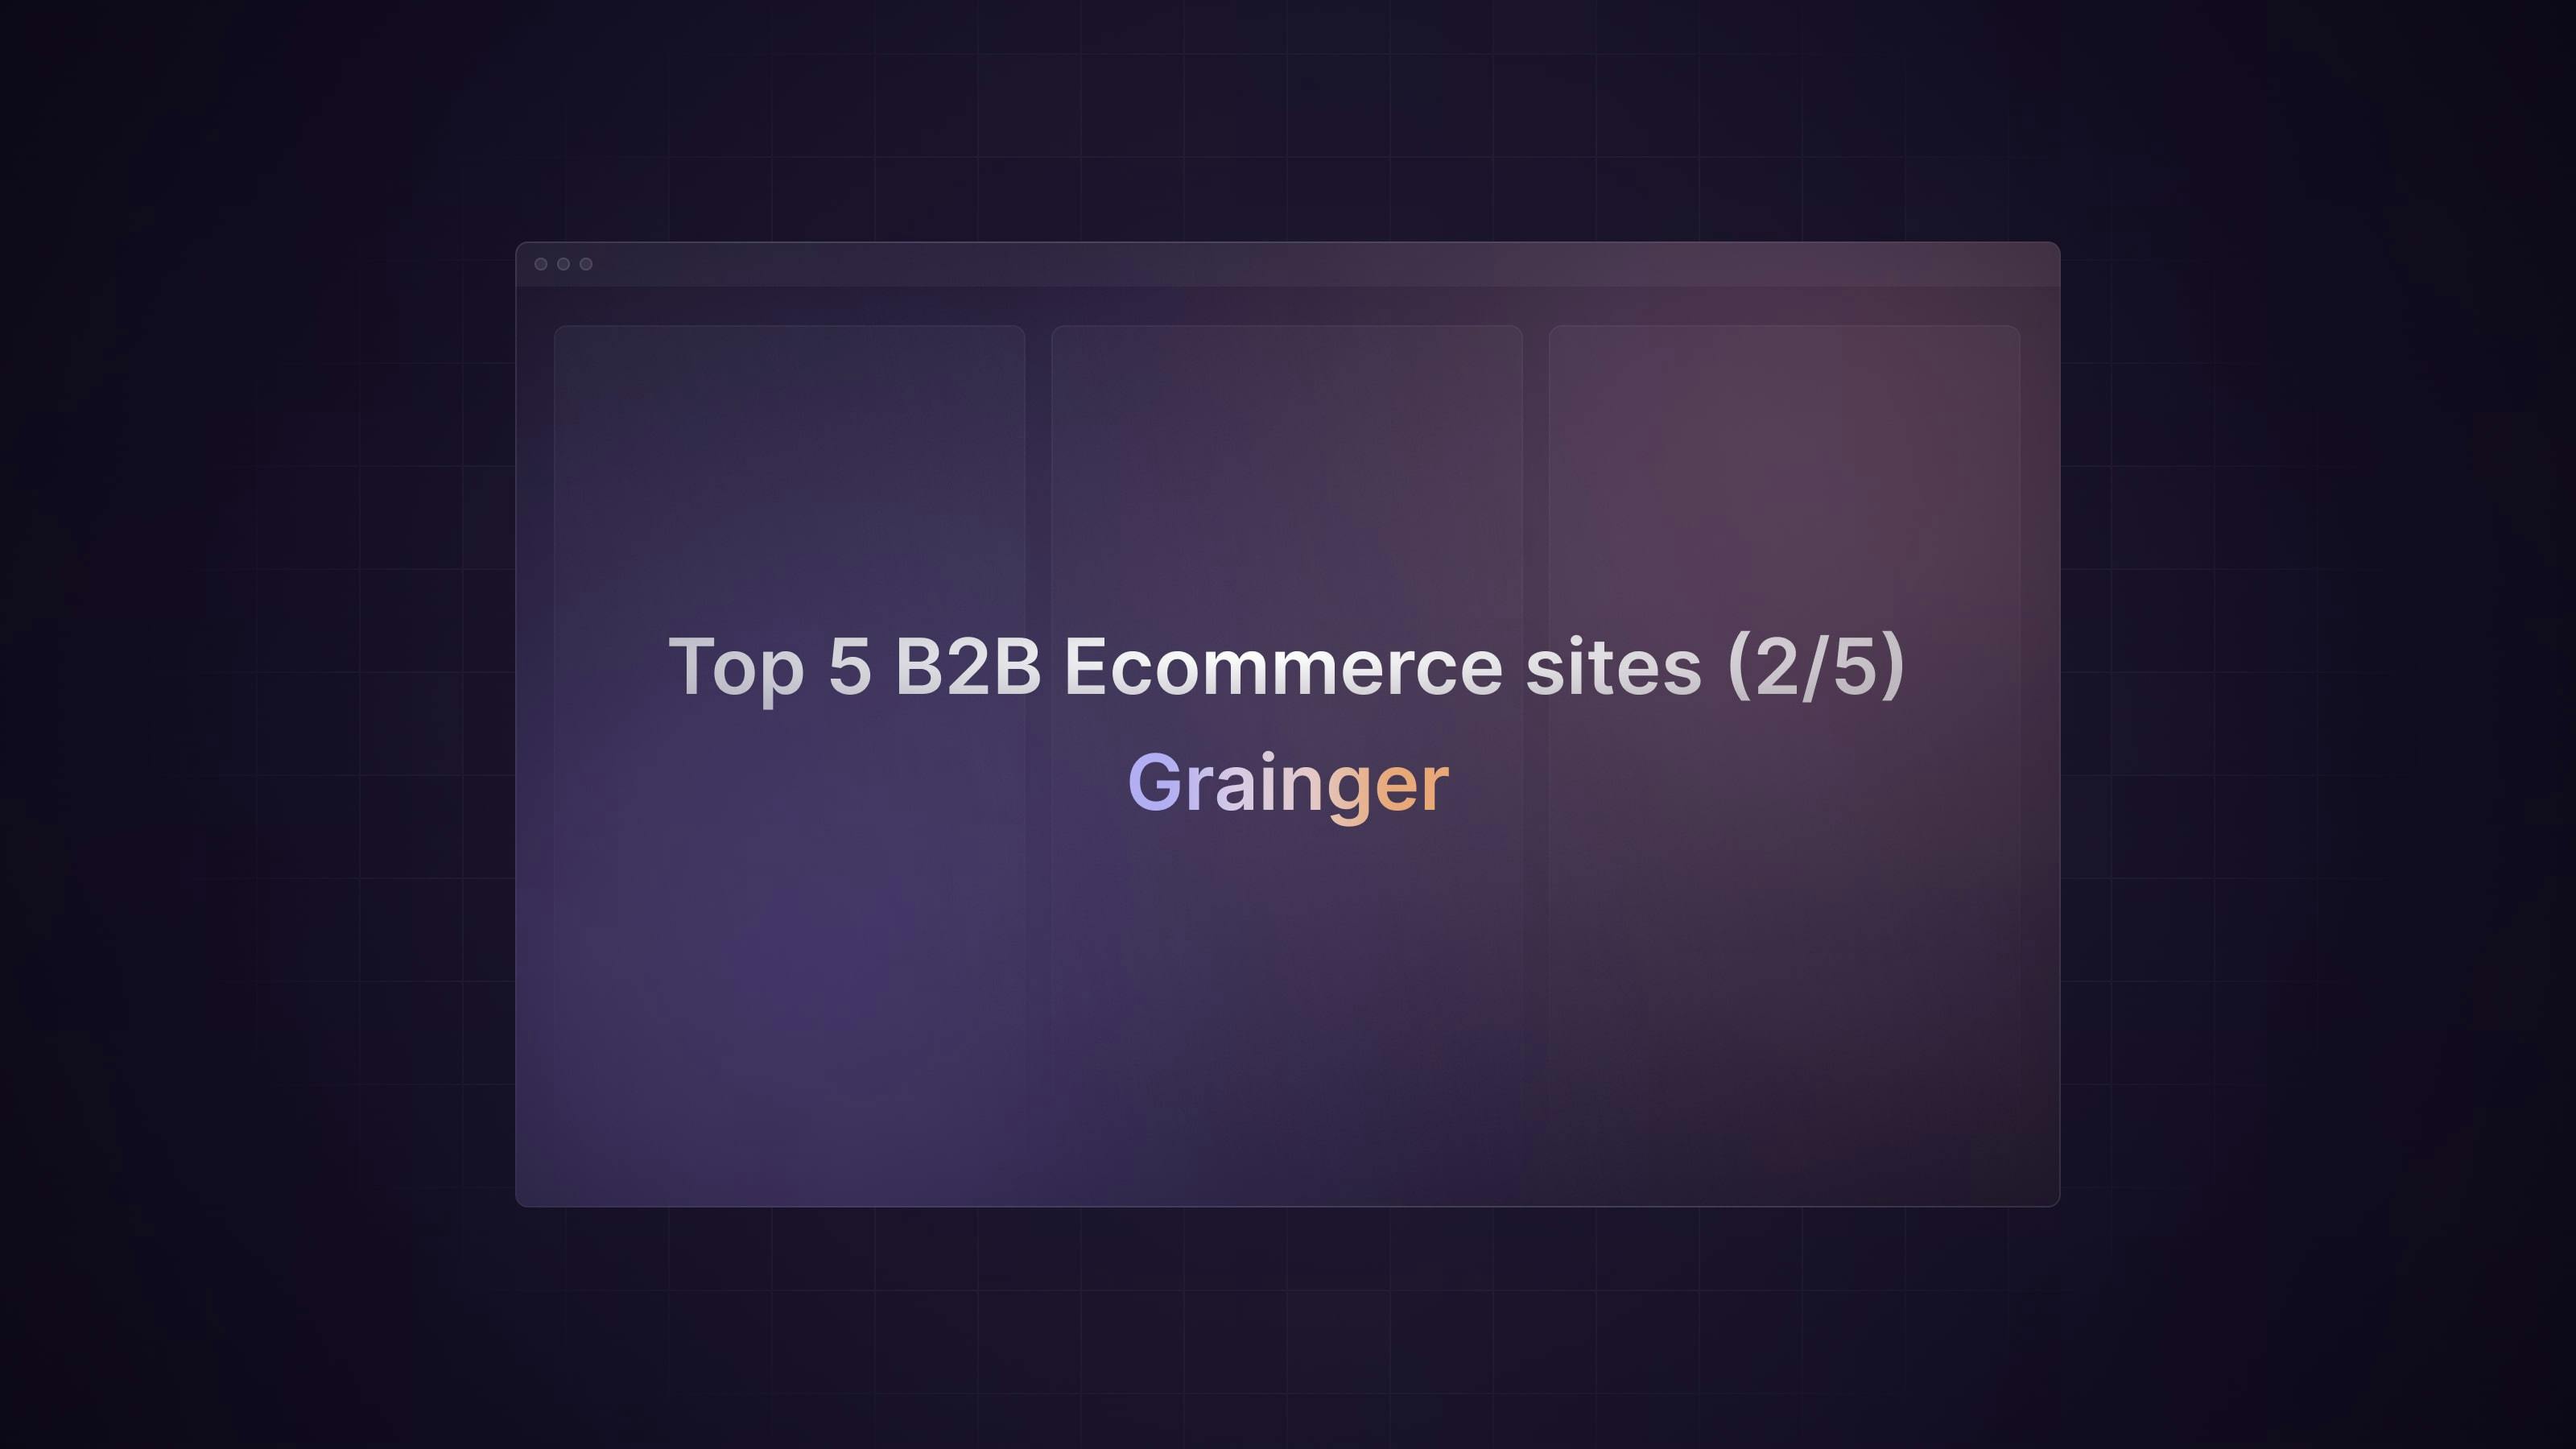 Top 5 B2B Ecommerce sites: Grainger (2/5)